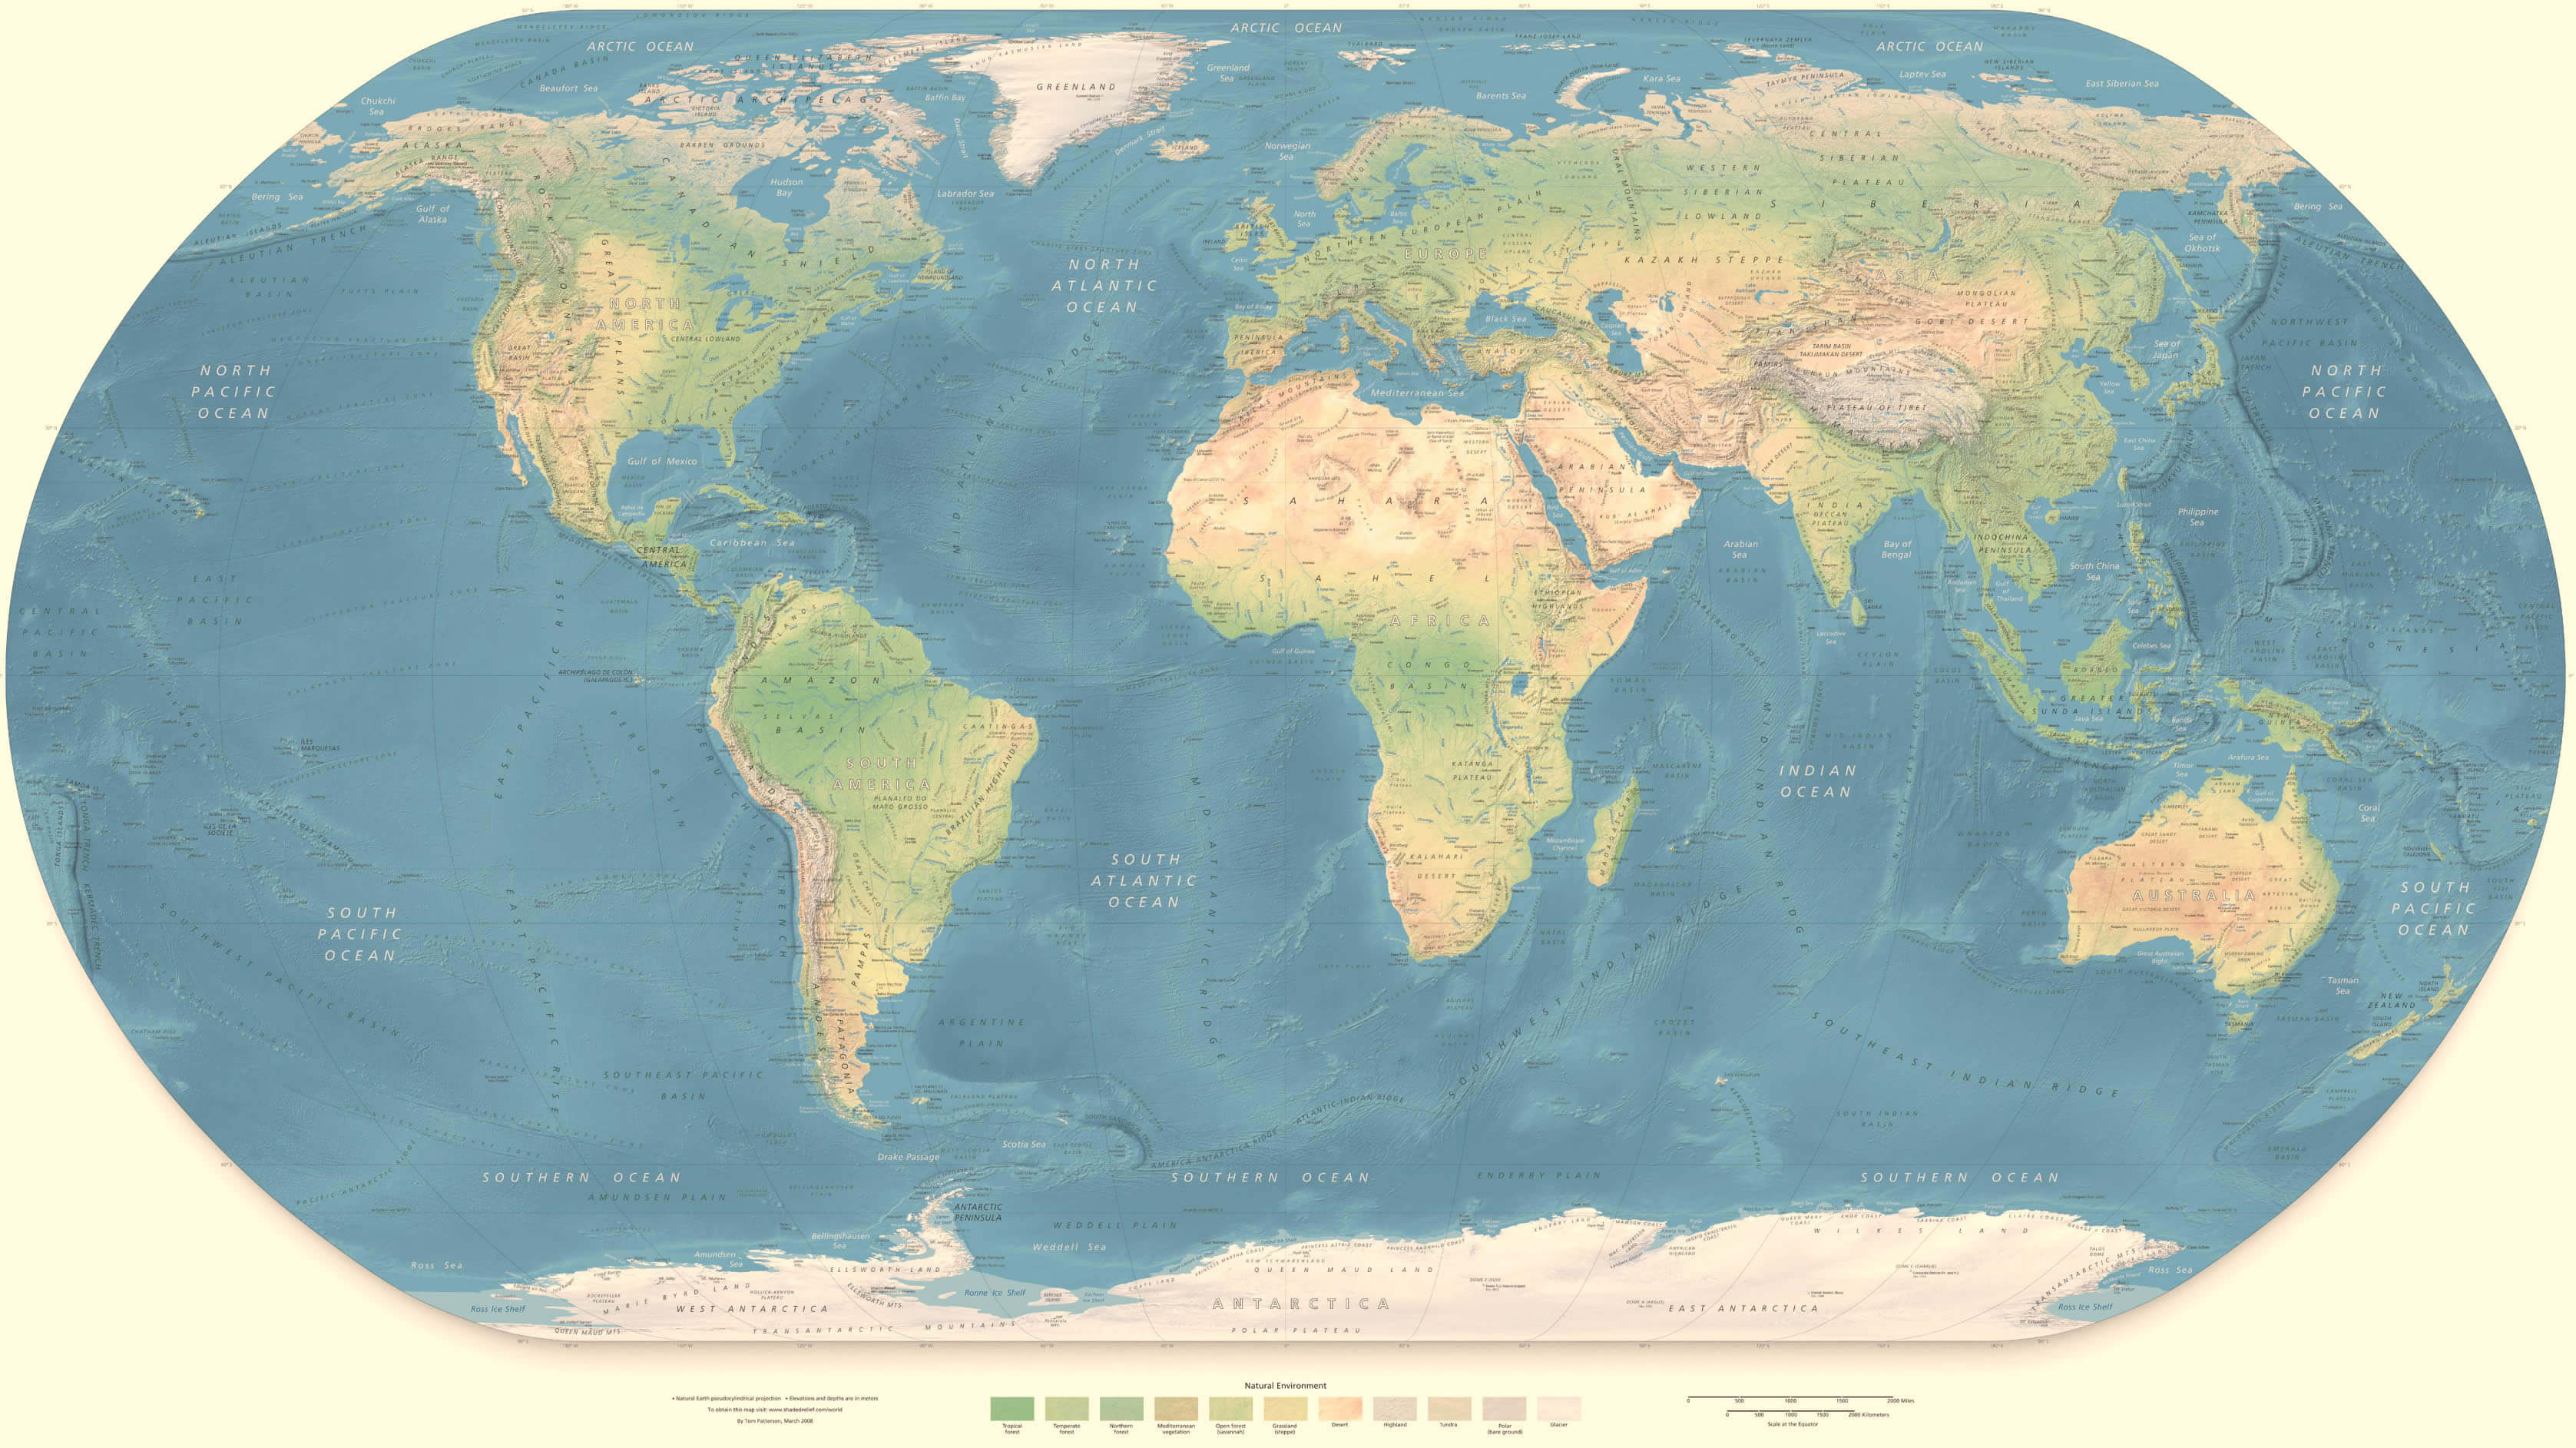 http://www.guideoftheworld.com/map/world/physical/physical_map_of_world.jpg